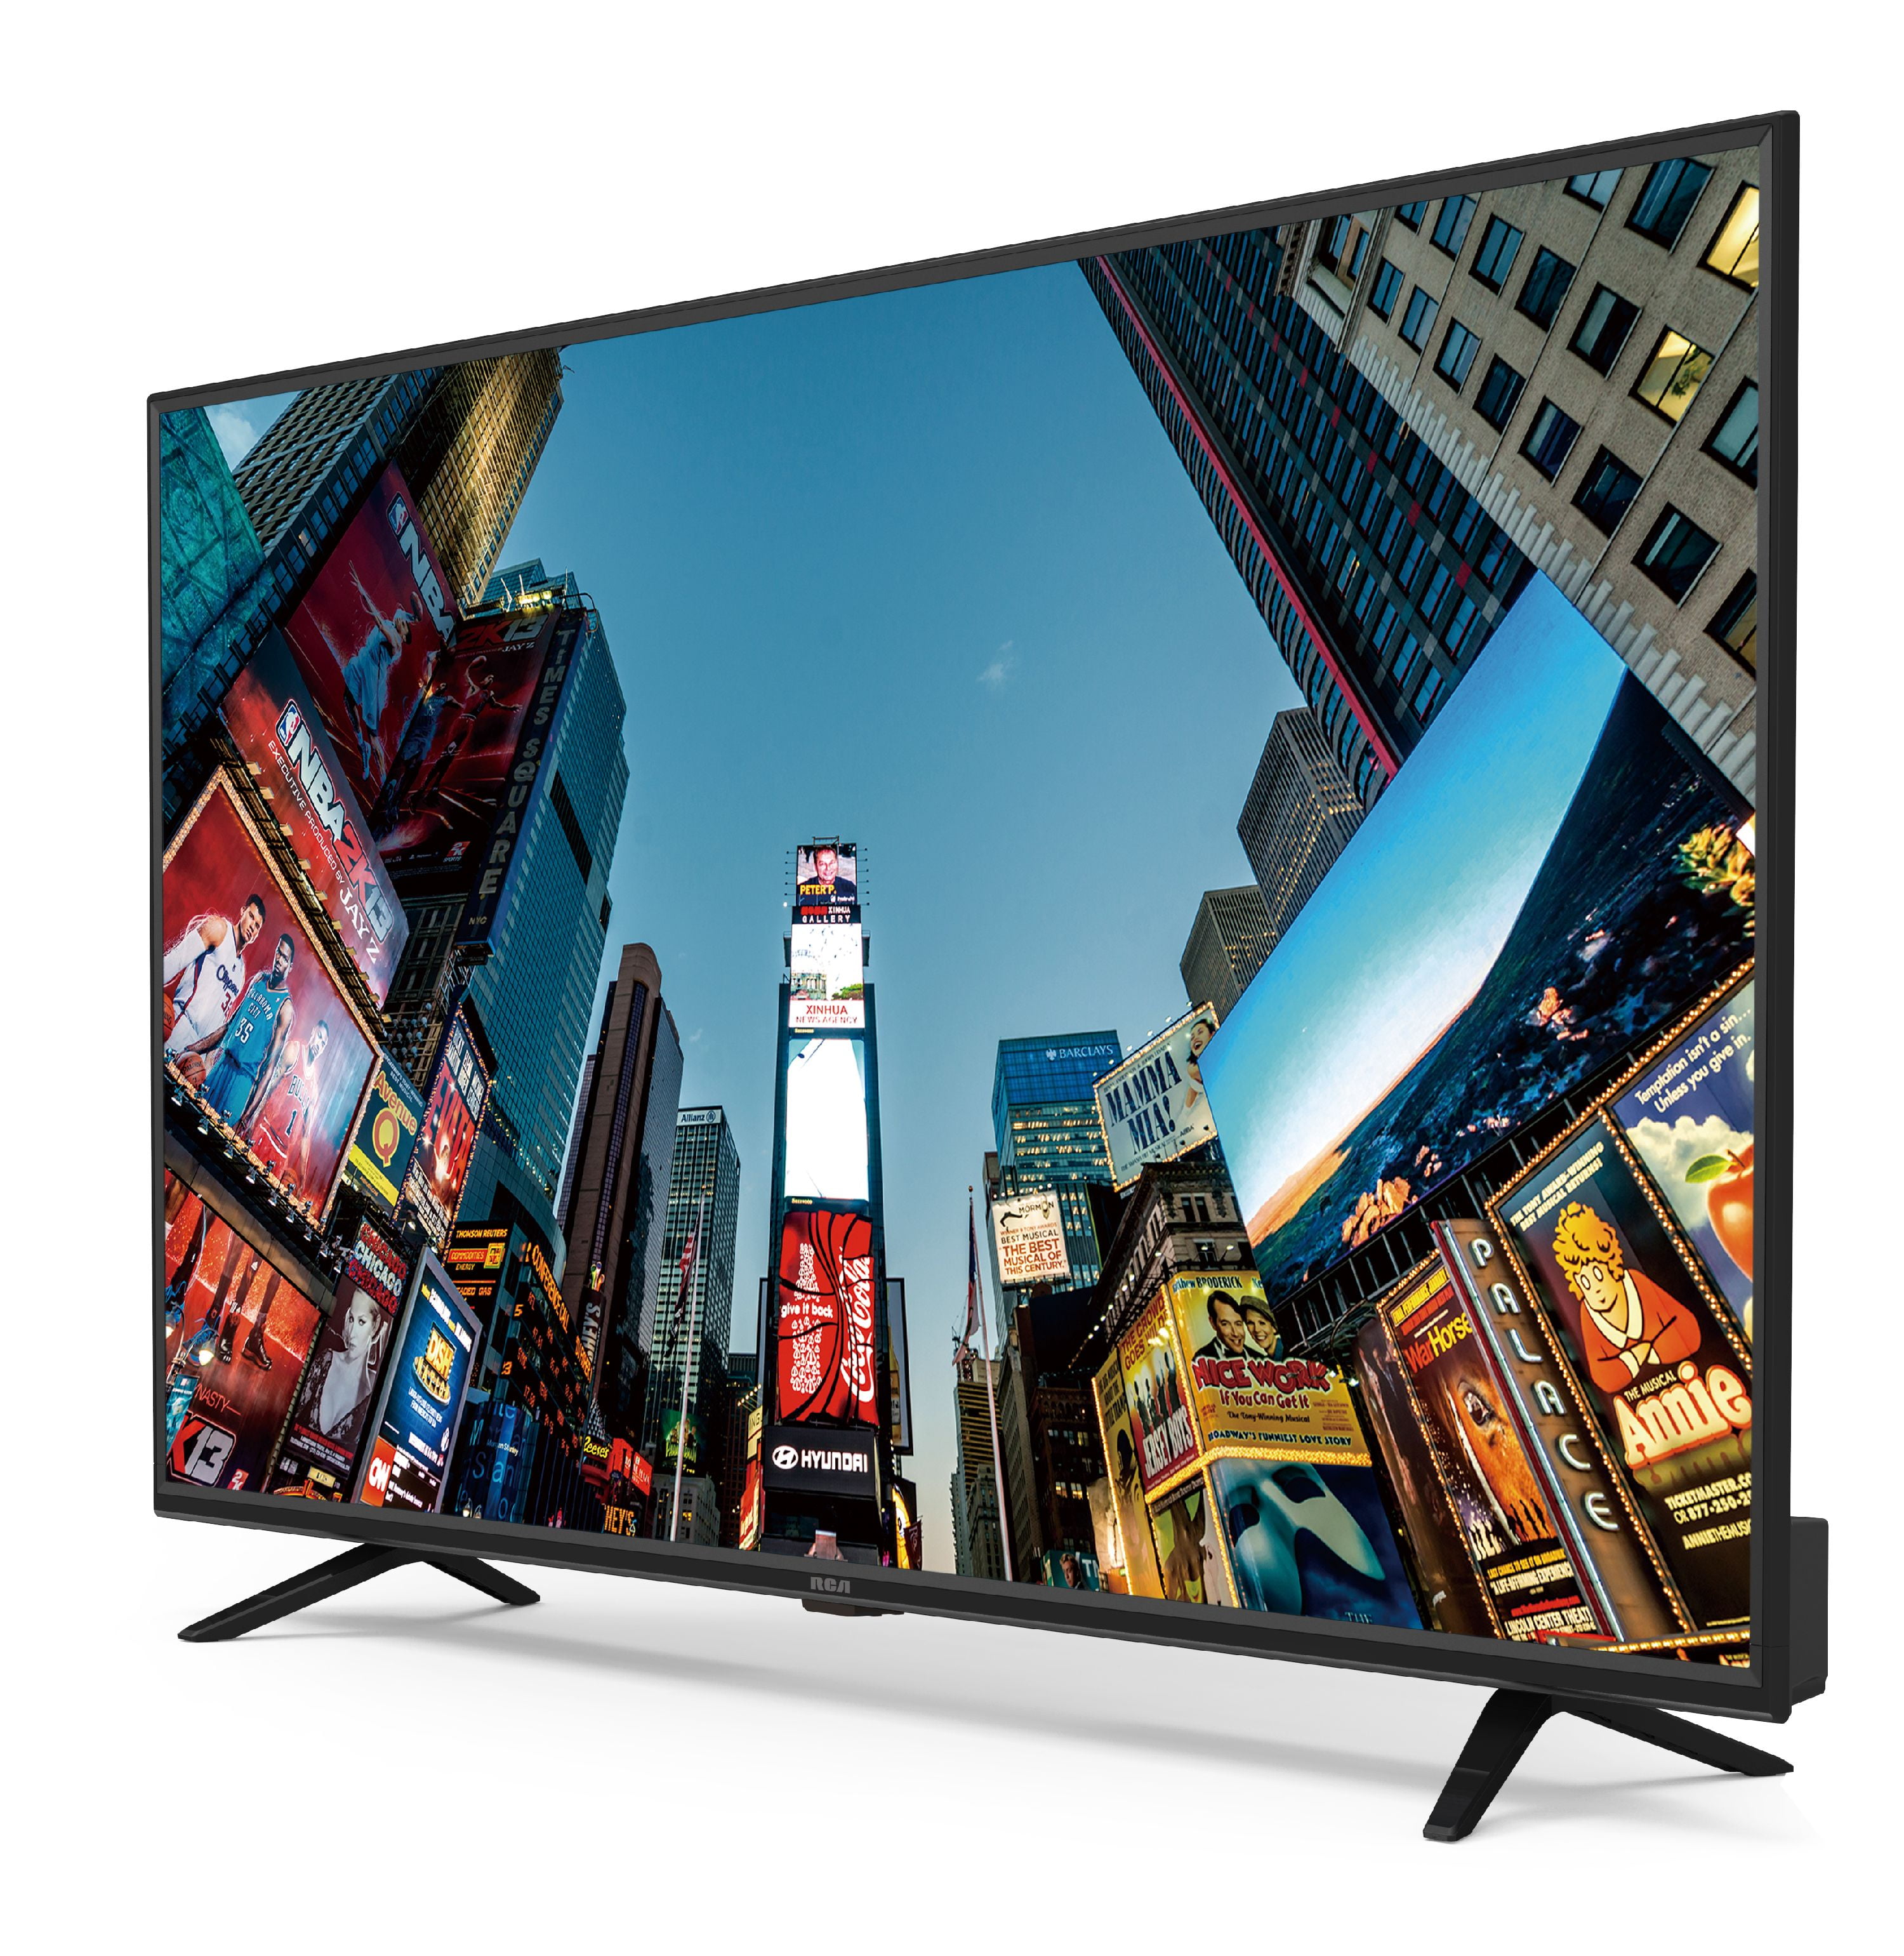 rense Natur Mere end noget andet RCA 43" Class 4K Ultra HD (2160P) LED TV (RTU4300) - Walmart.com